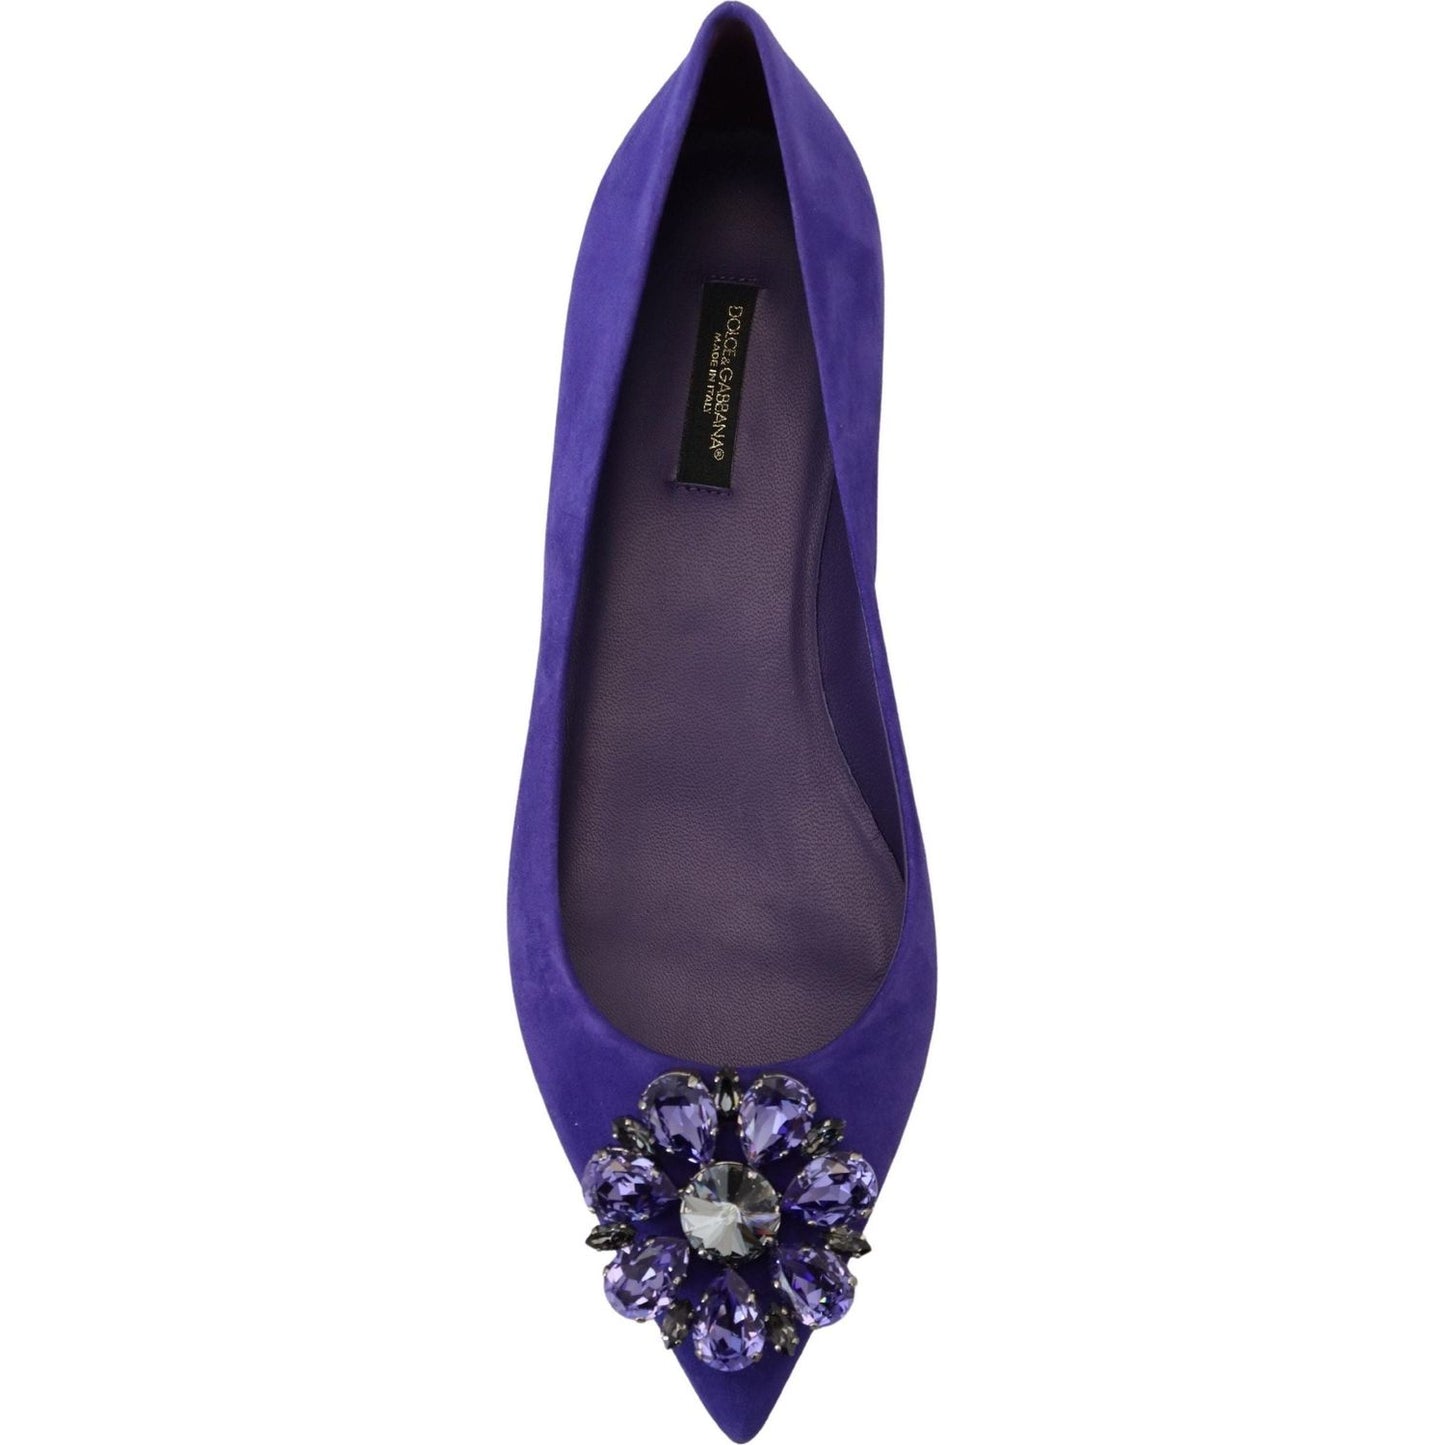 Dolce & Gabbana Embellished Crystal Purple Suede Flats purple-suede-crystals-loafers-flats-shoes IMG_8923-scaled-b7612aac-b0e.jpg